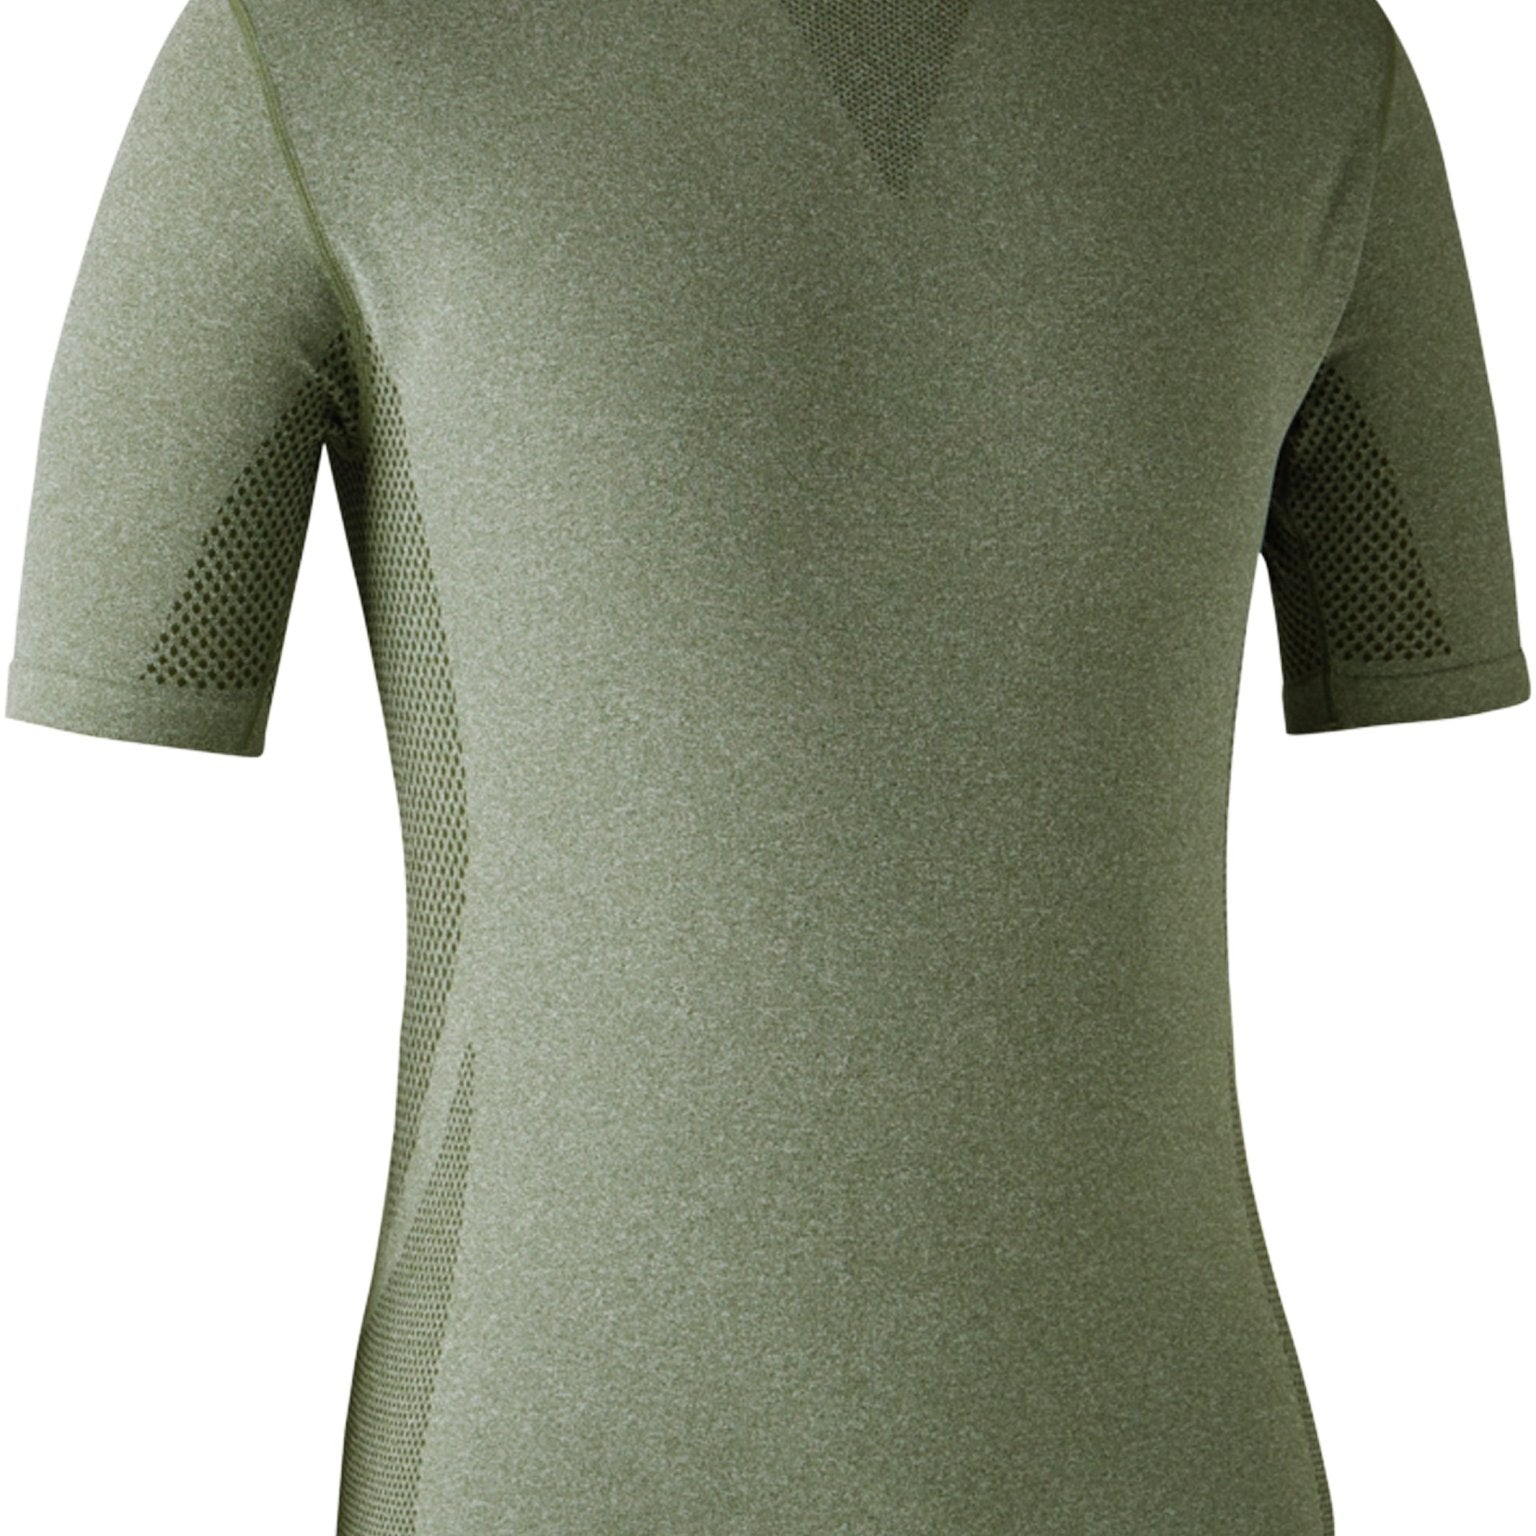 4elementsclothingDeerhunterDeerhunter - Mens Perfomance Base Layer / Mens T-shirt / Mens under shirtShirt7048-343-SM